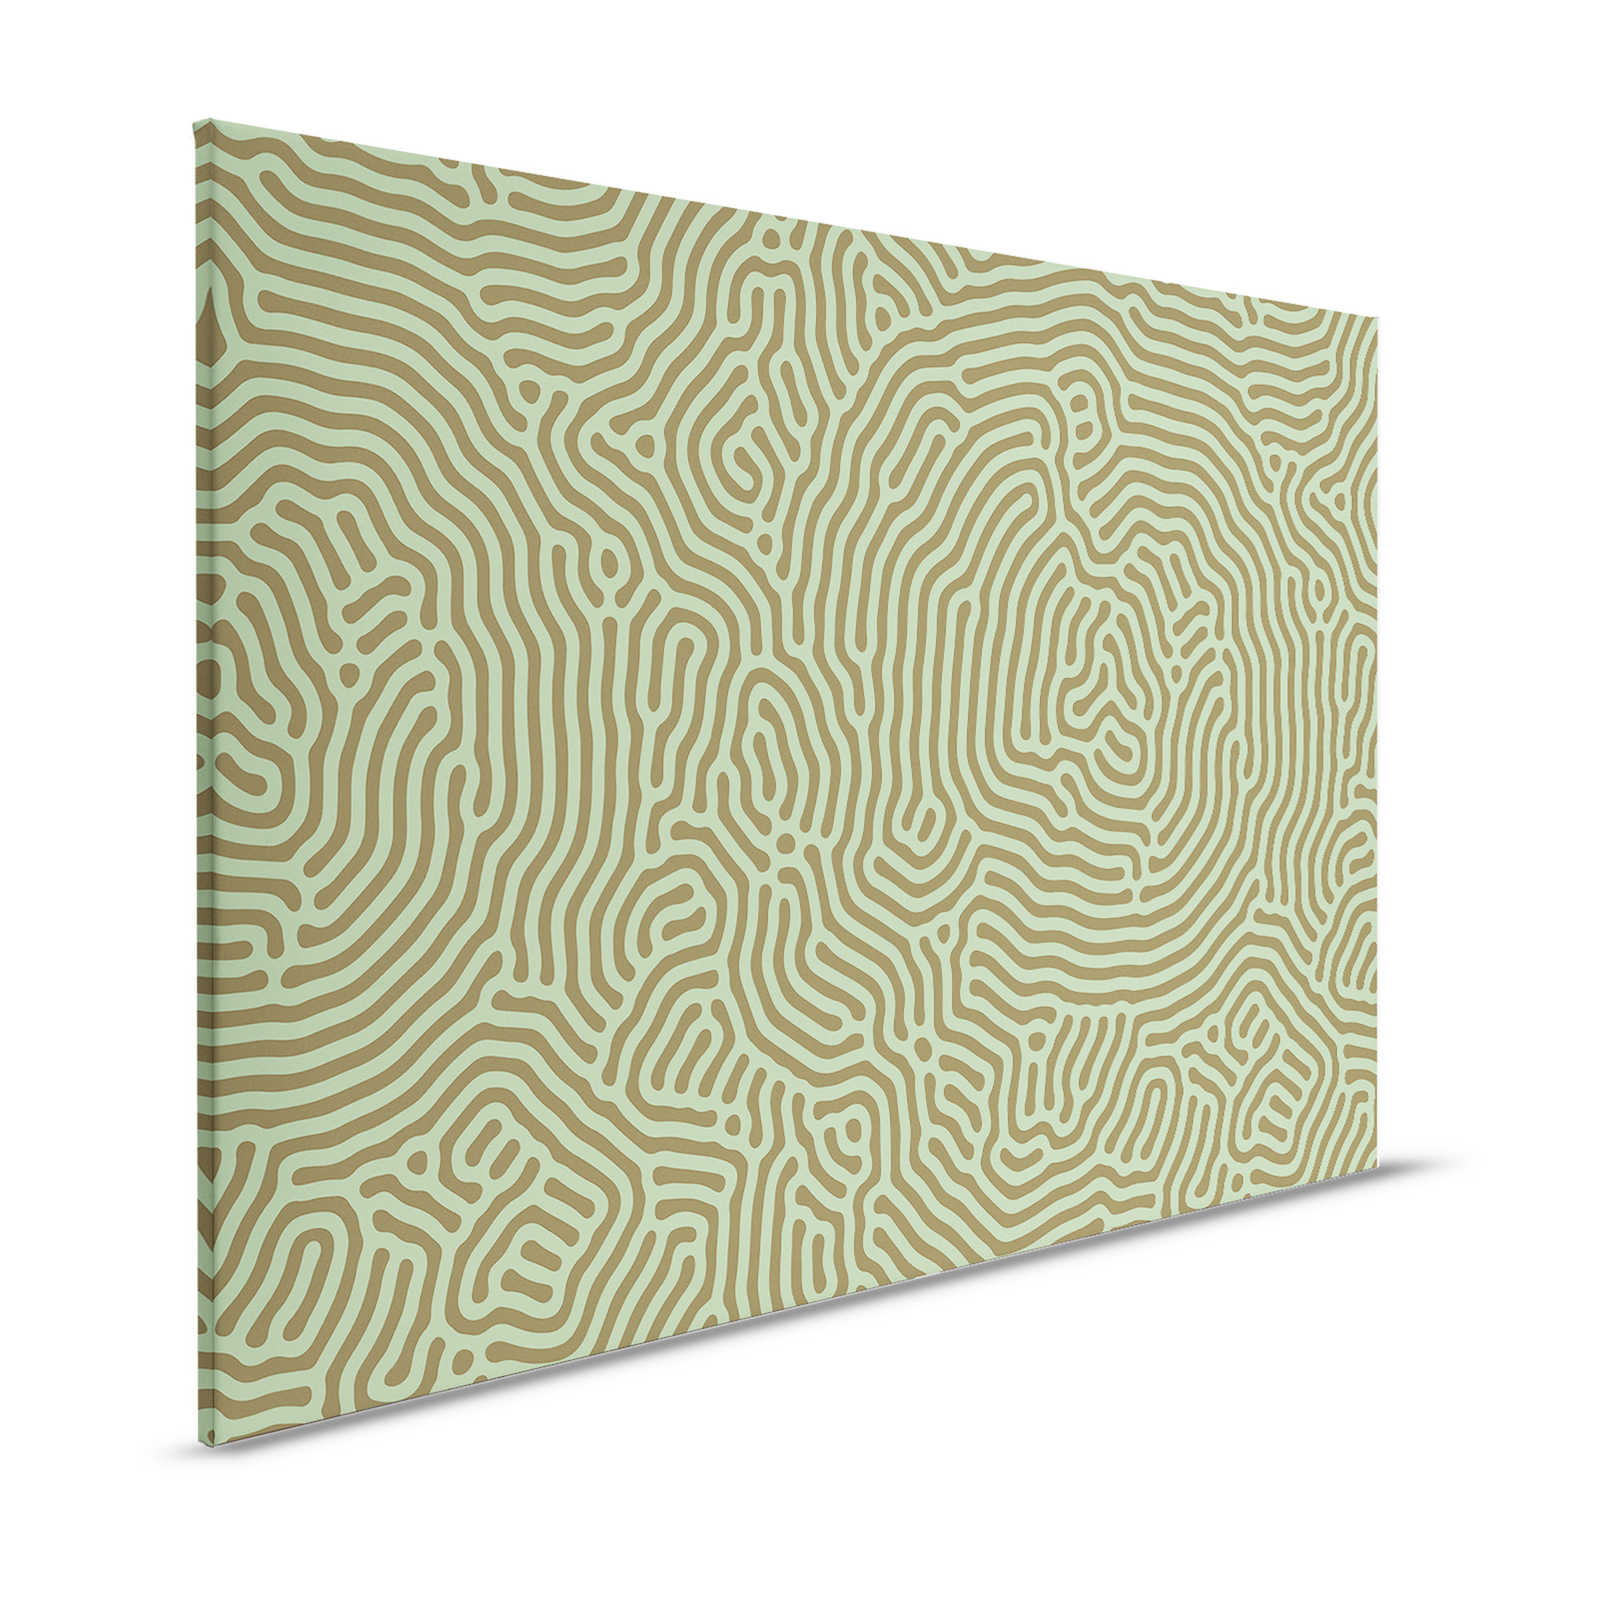 Sahel 1 - Groen Canvas schilderij Labyrint patroon Sage Green - 1.20 m x 0.80 m
